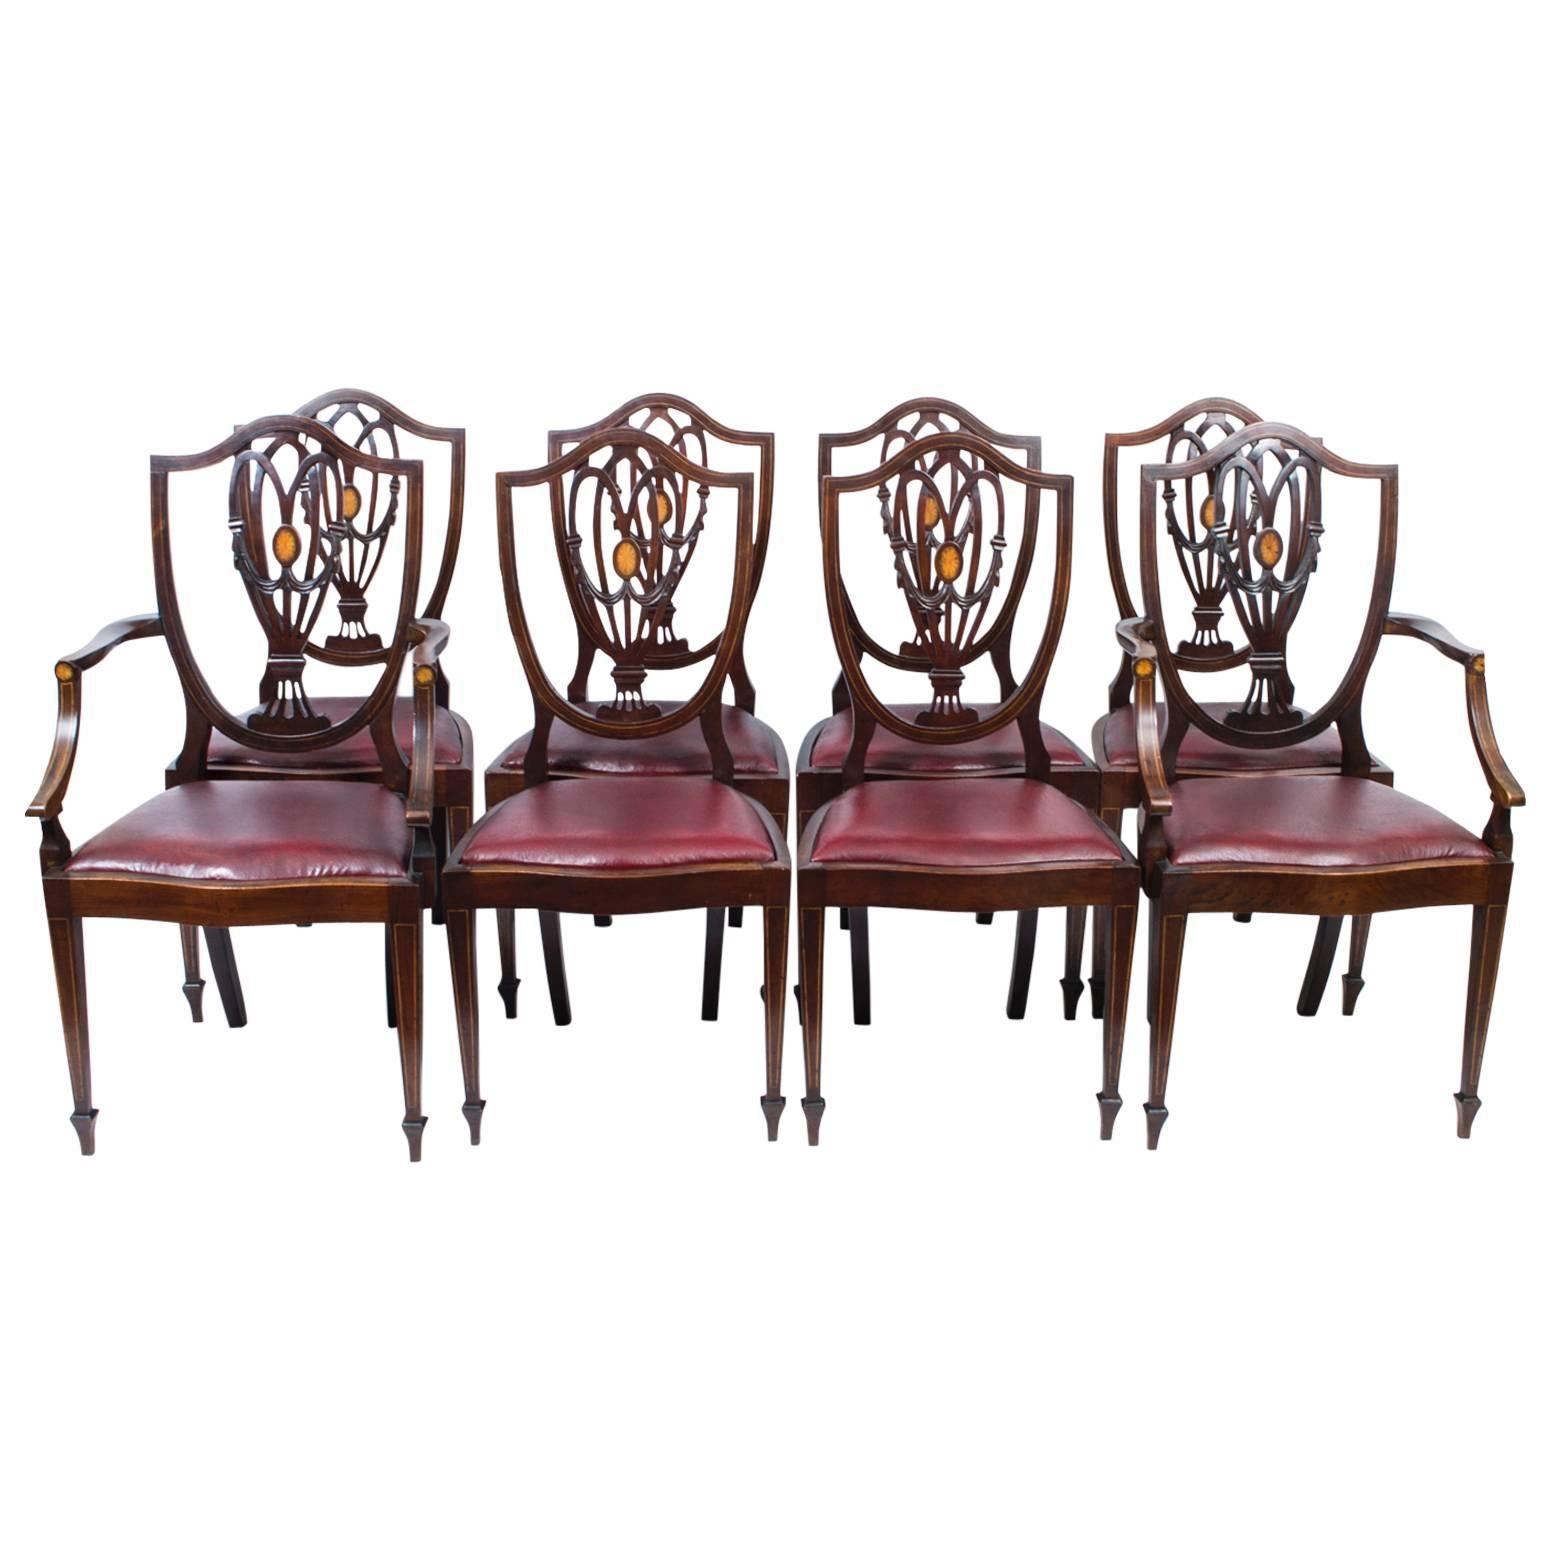 Antique Set of Eight English Hepplewhite Dining Chairs, circa 1900